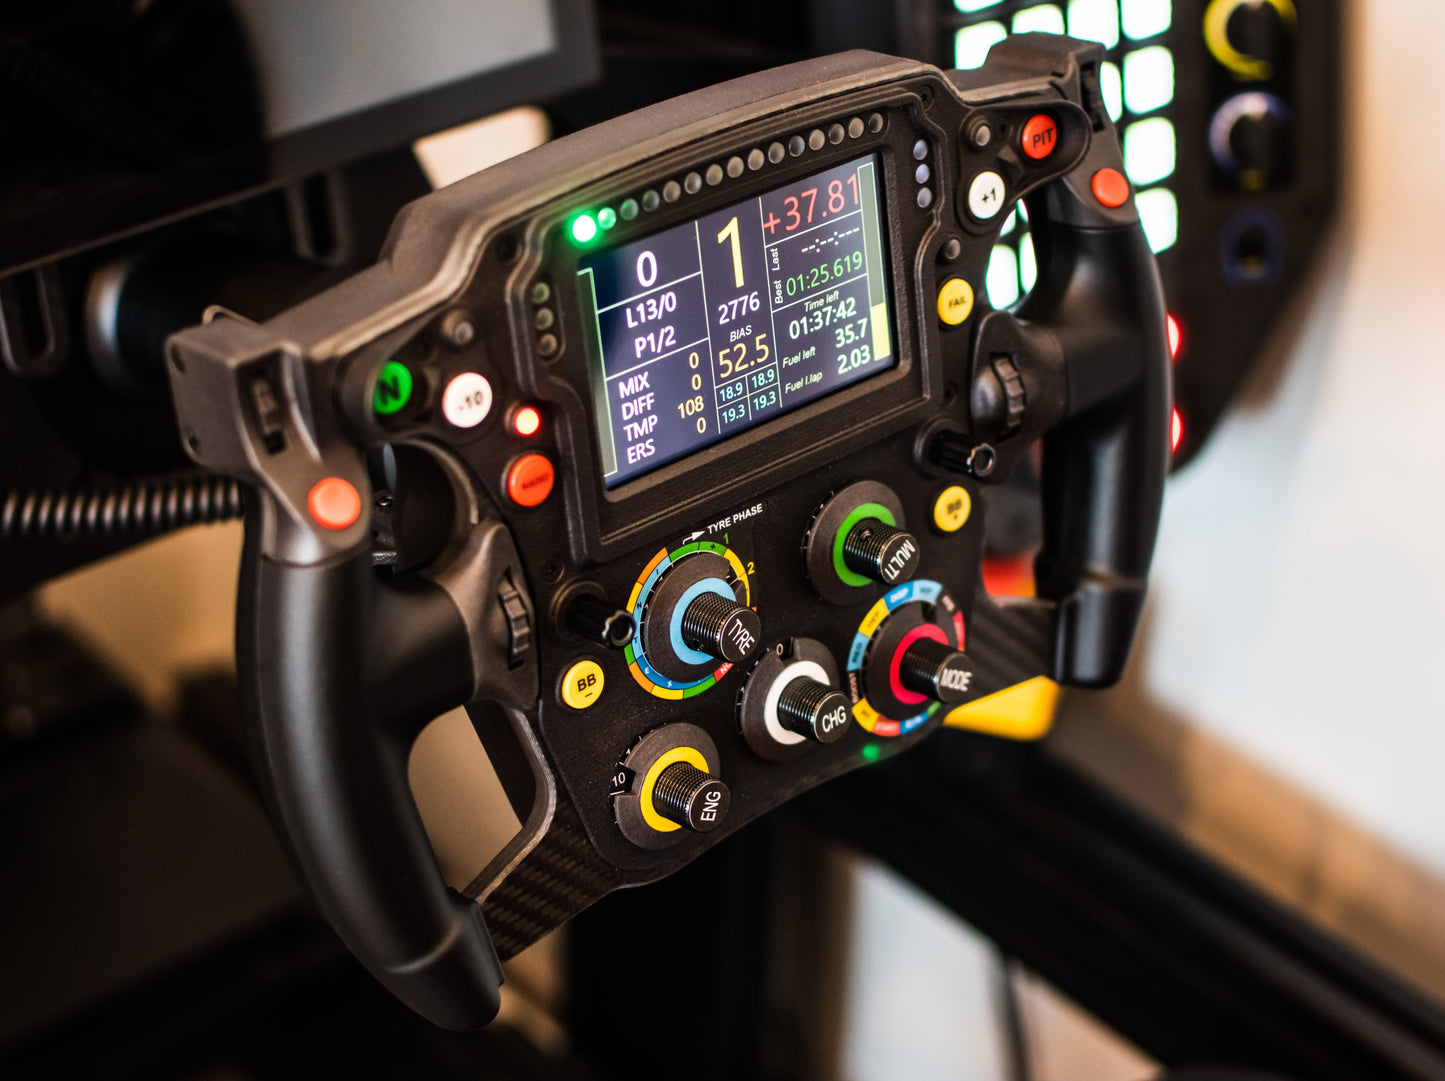 Pokornyi Engineering F1 PRO DIY steering wheel with VoCore display